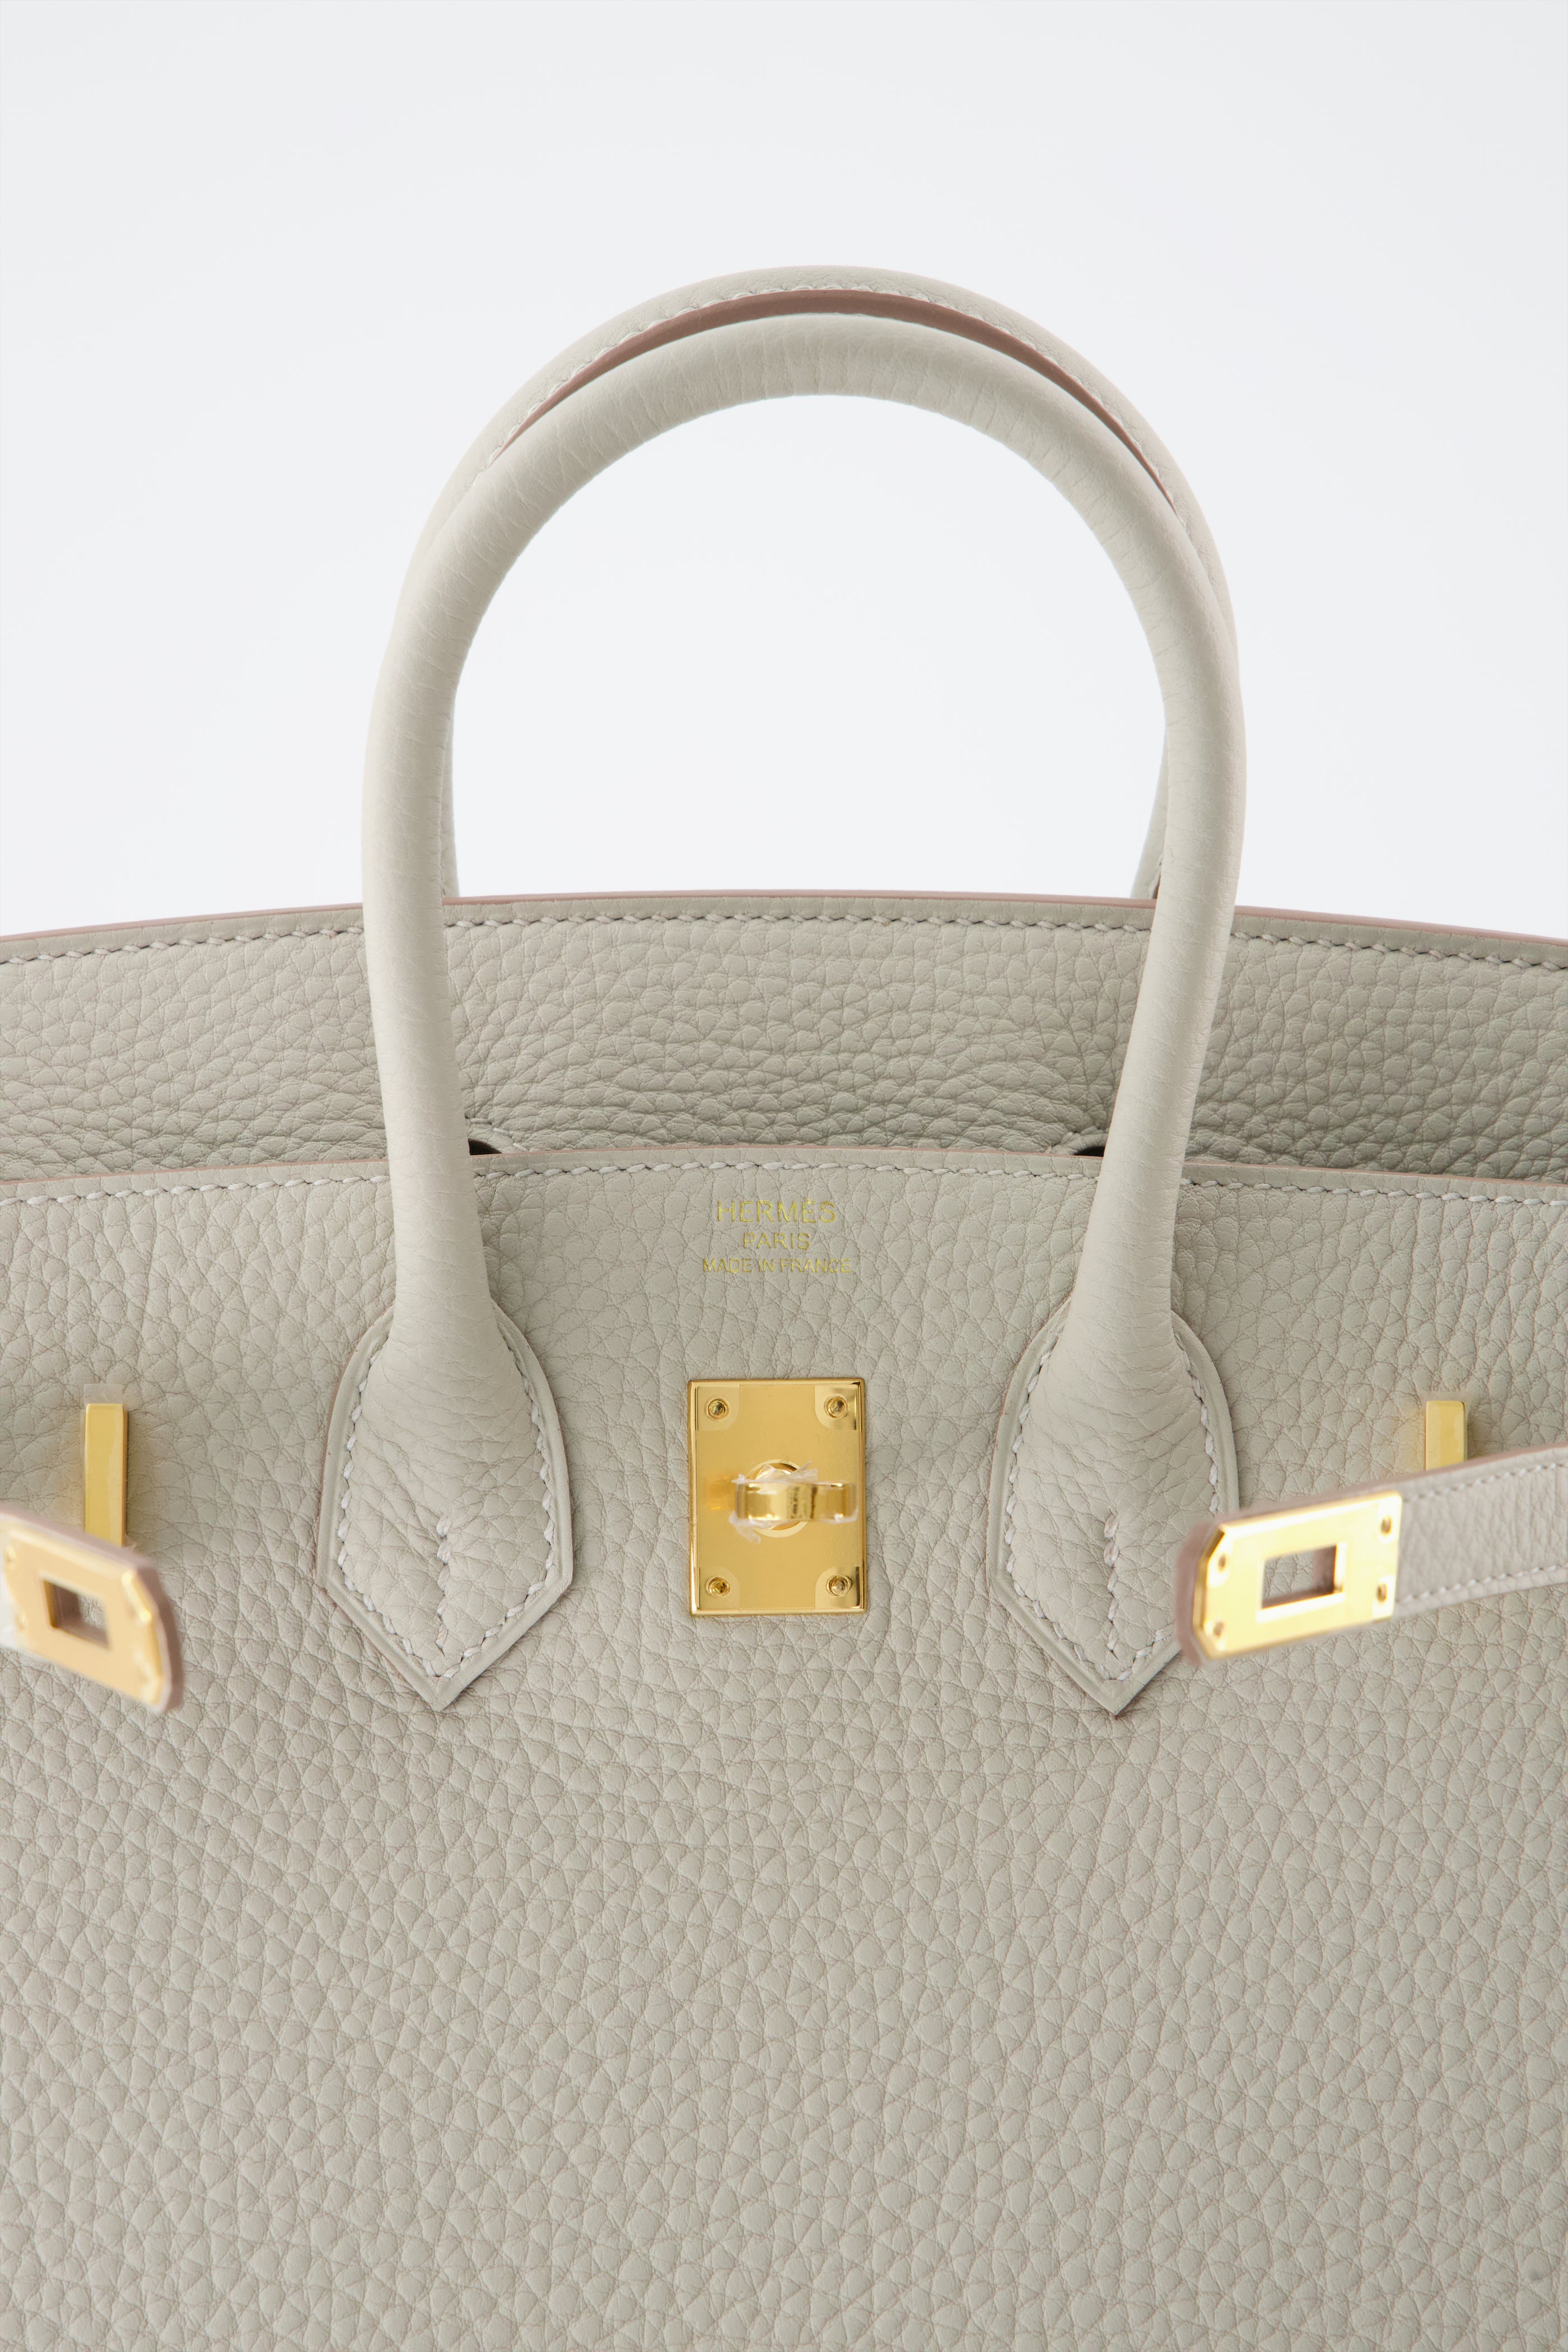 *Rare* Hermes Birkin 25 Handbag Gris Perle Togo Leather With Gold Hardware. Investment Piece